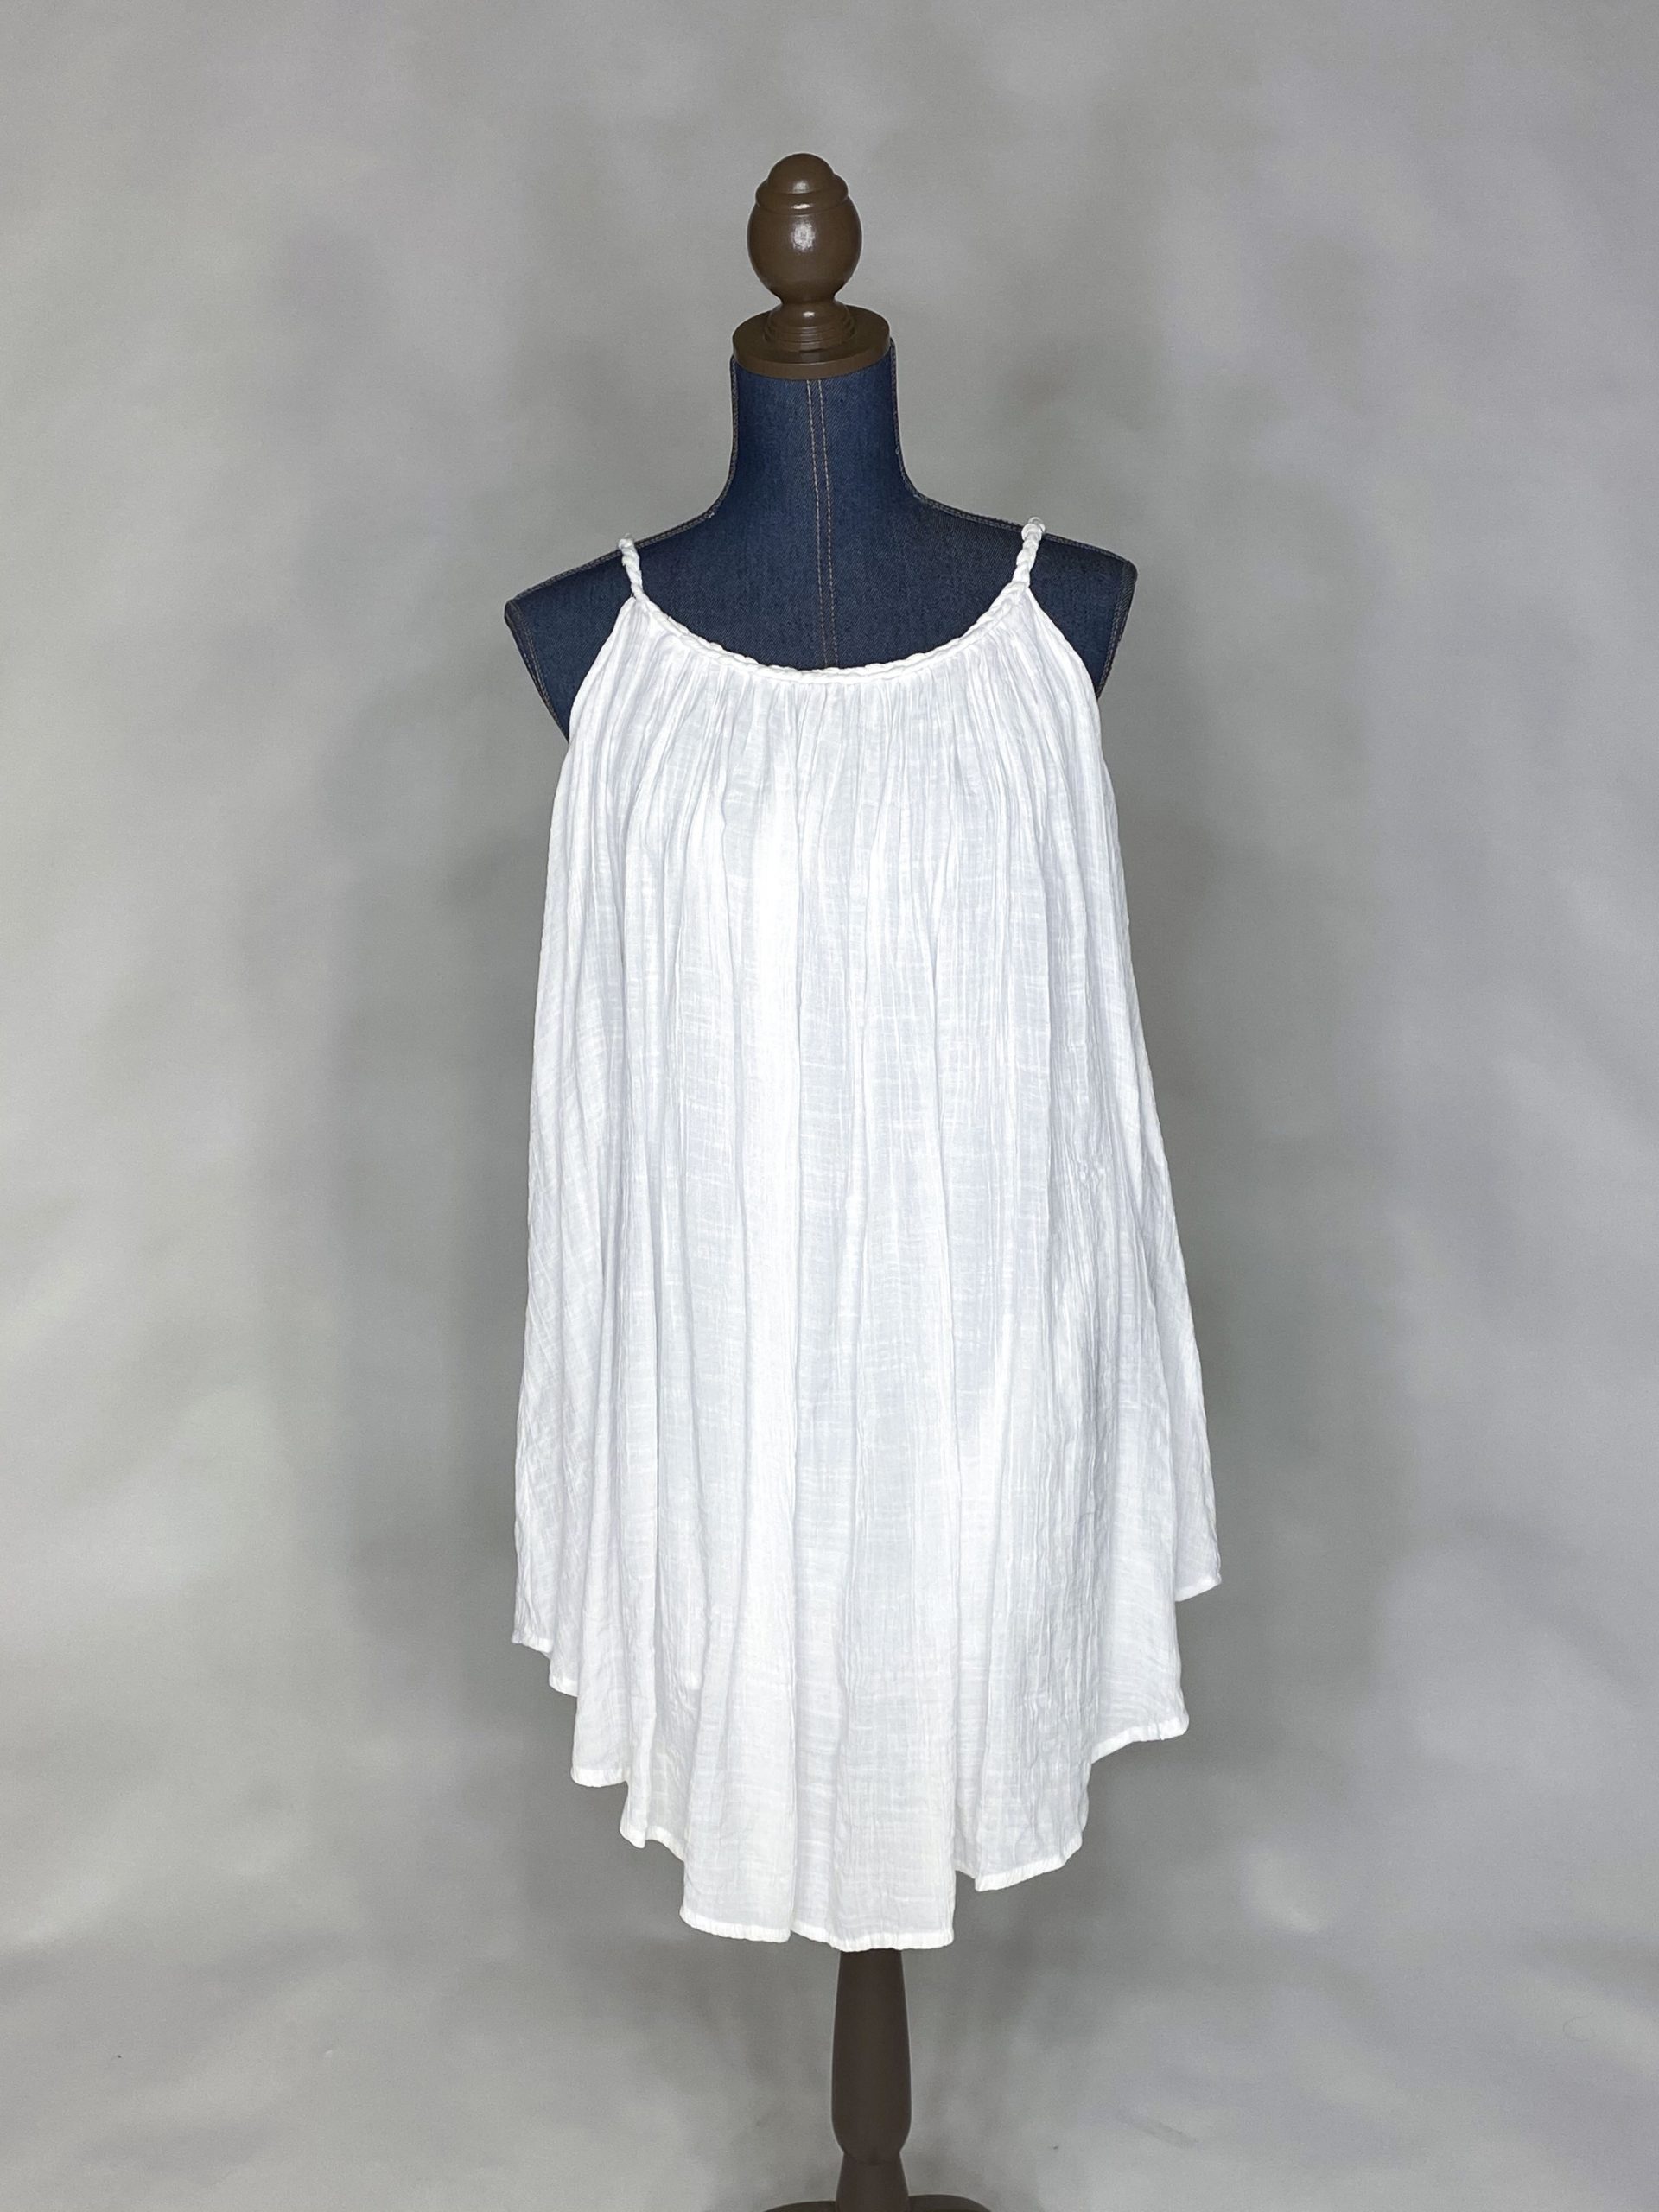 White short dress size Medium